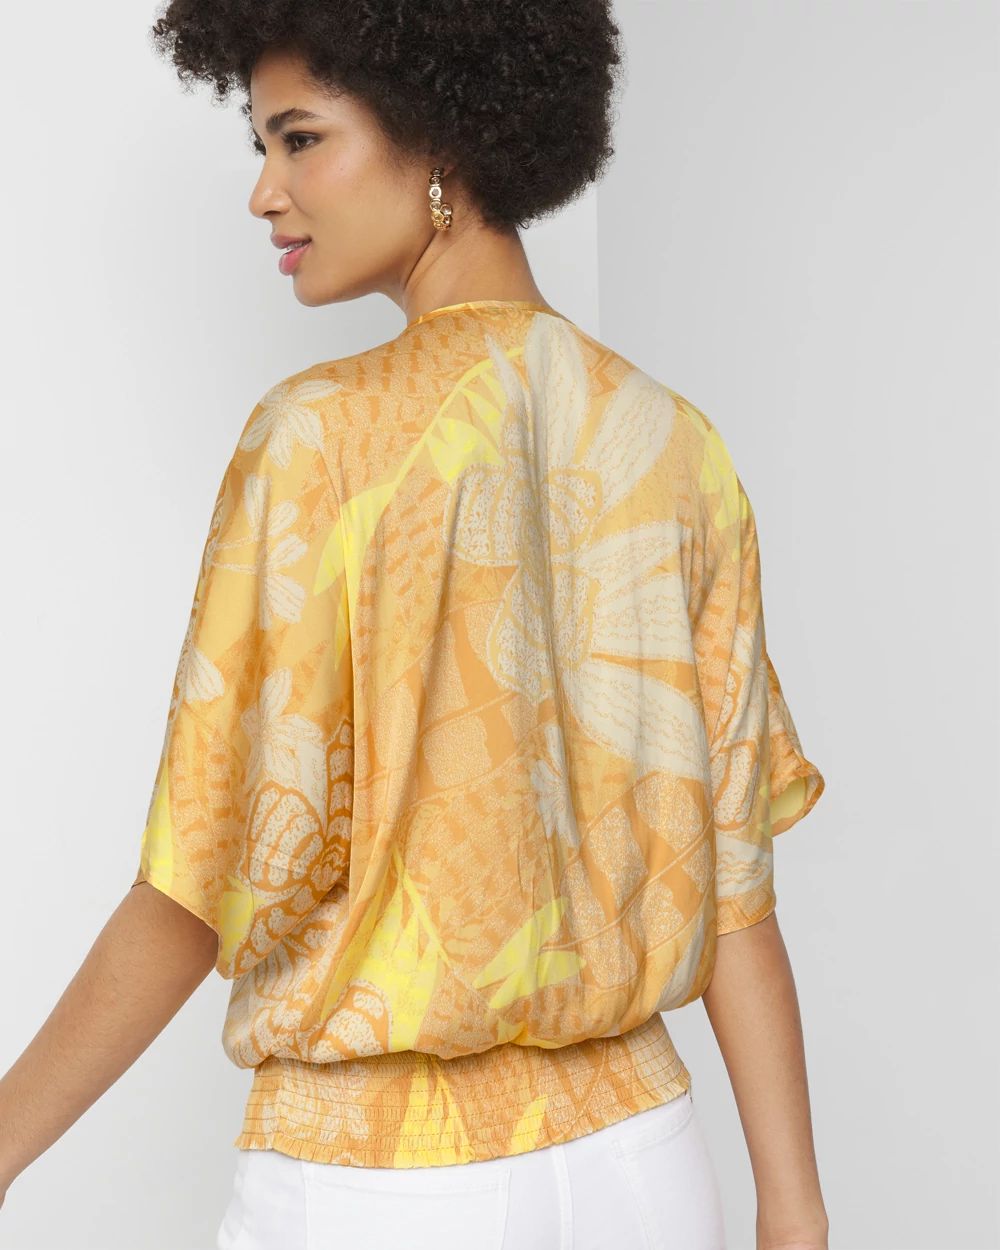 Elbow-Sleeve Smocked Bottom Kimono click to view larger image.